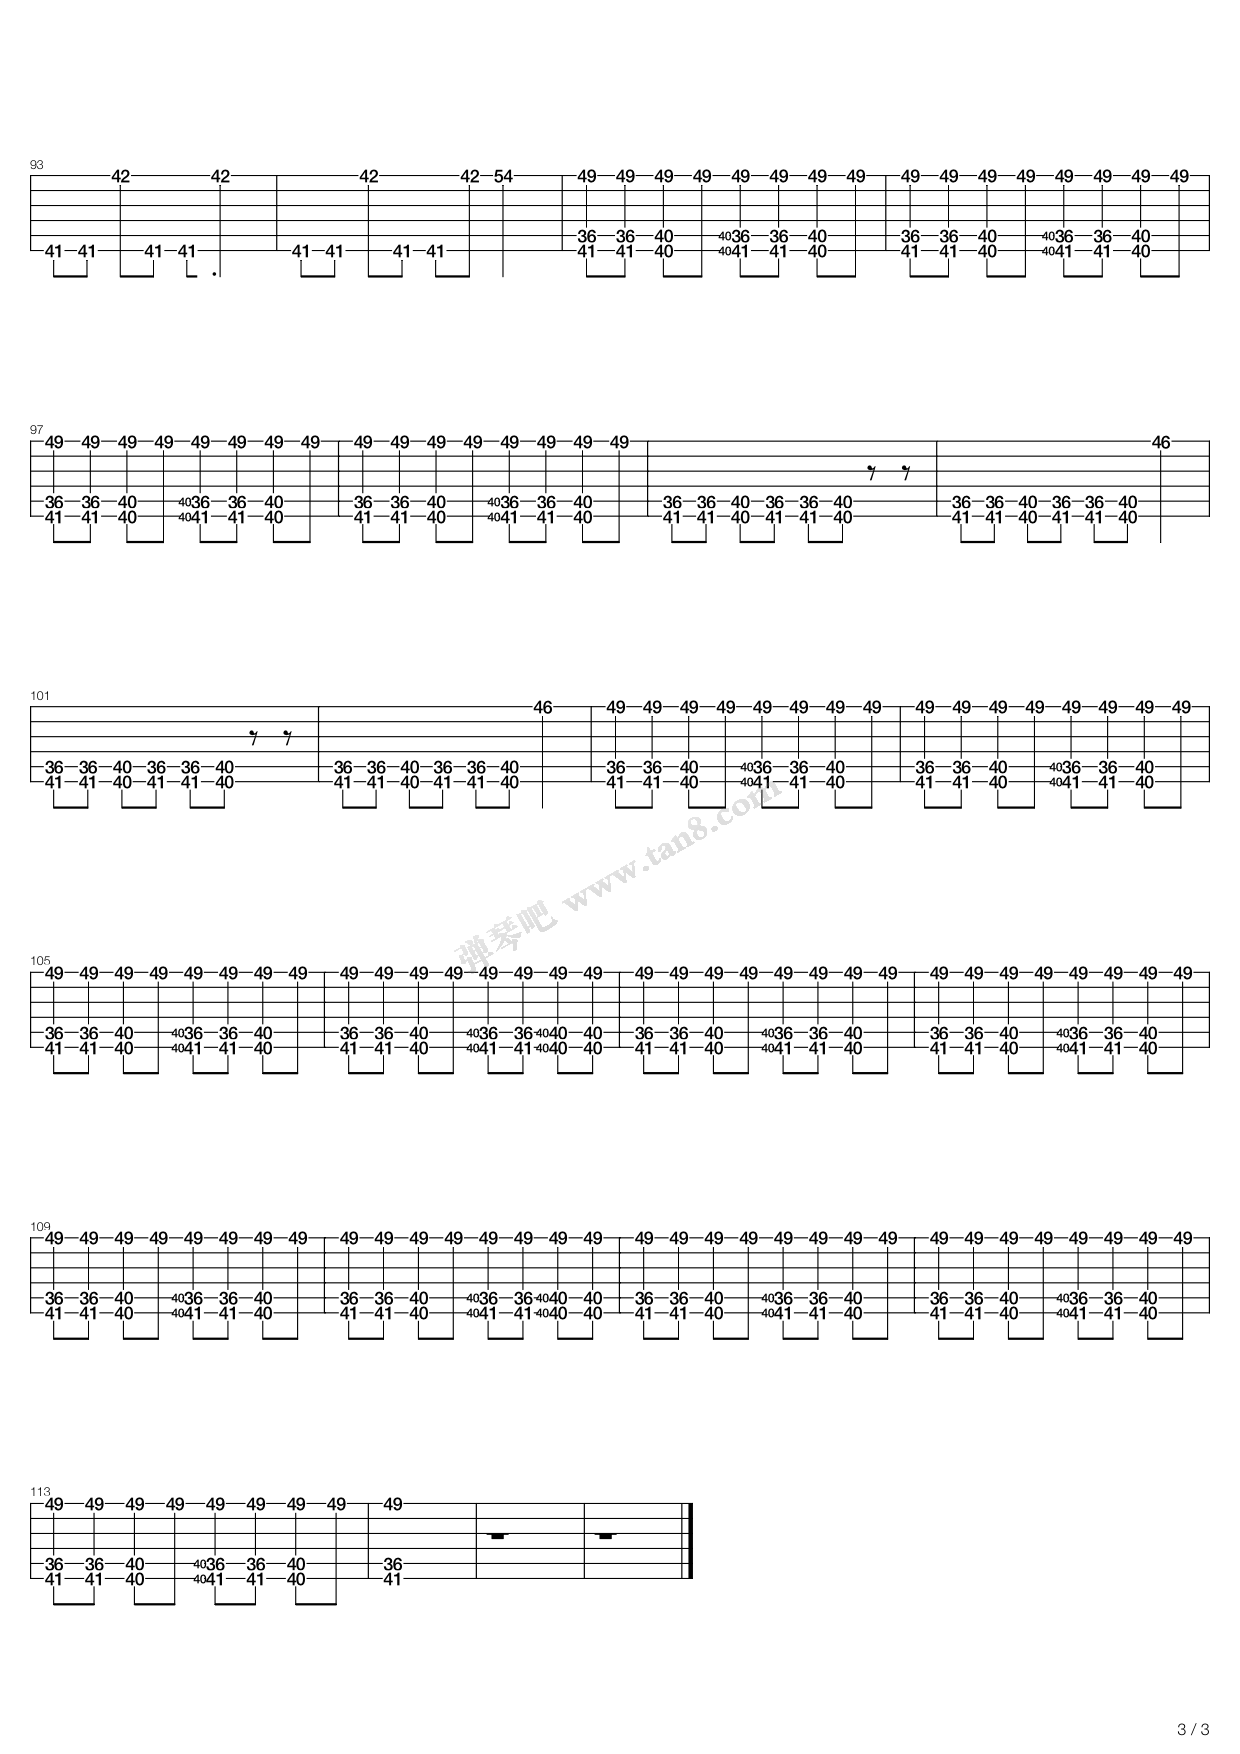 Avicii "Wake Me Up" Guitar and Bass sheet music | Jellynote